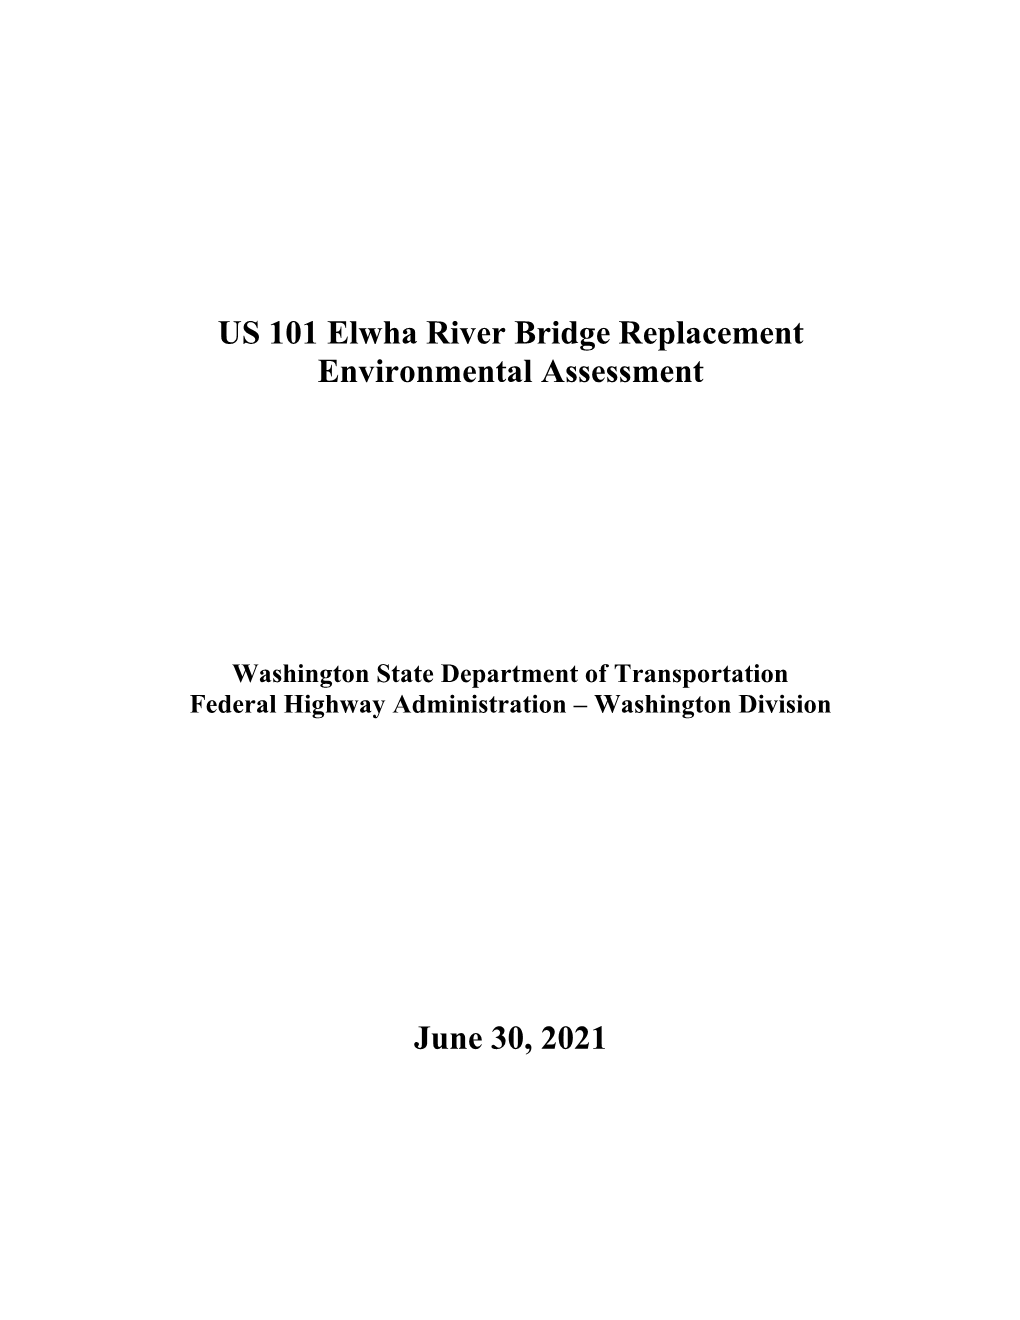 US 101 Elwha River Bridge Environmental Assessment With